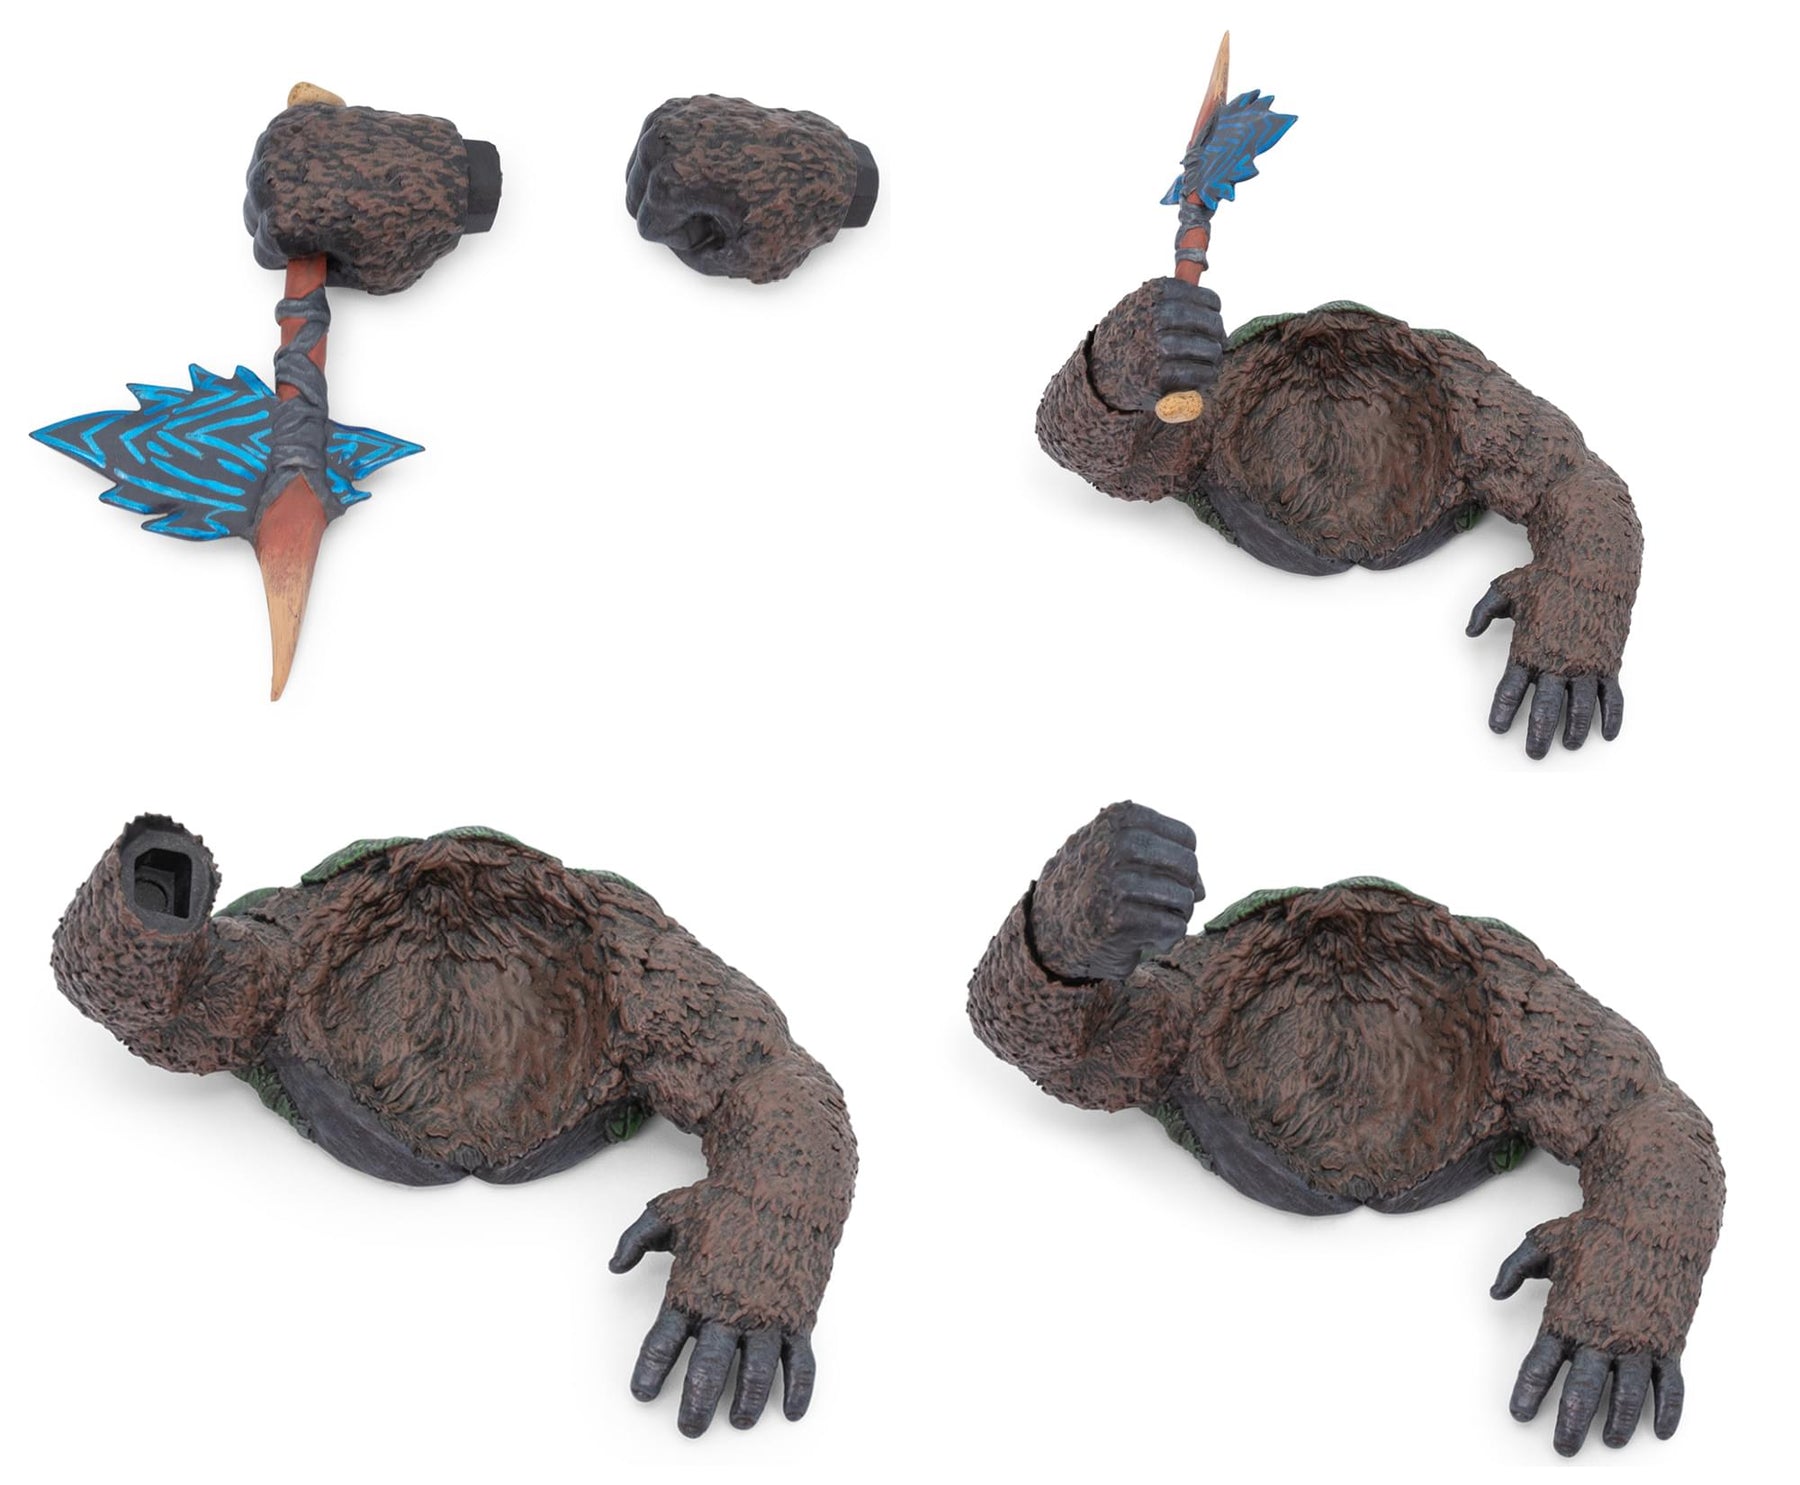 Godzilla Vs Kong Exclusive Mondoids 3.3 Inch Vinyl Figure | Kong